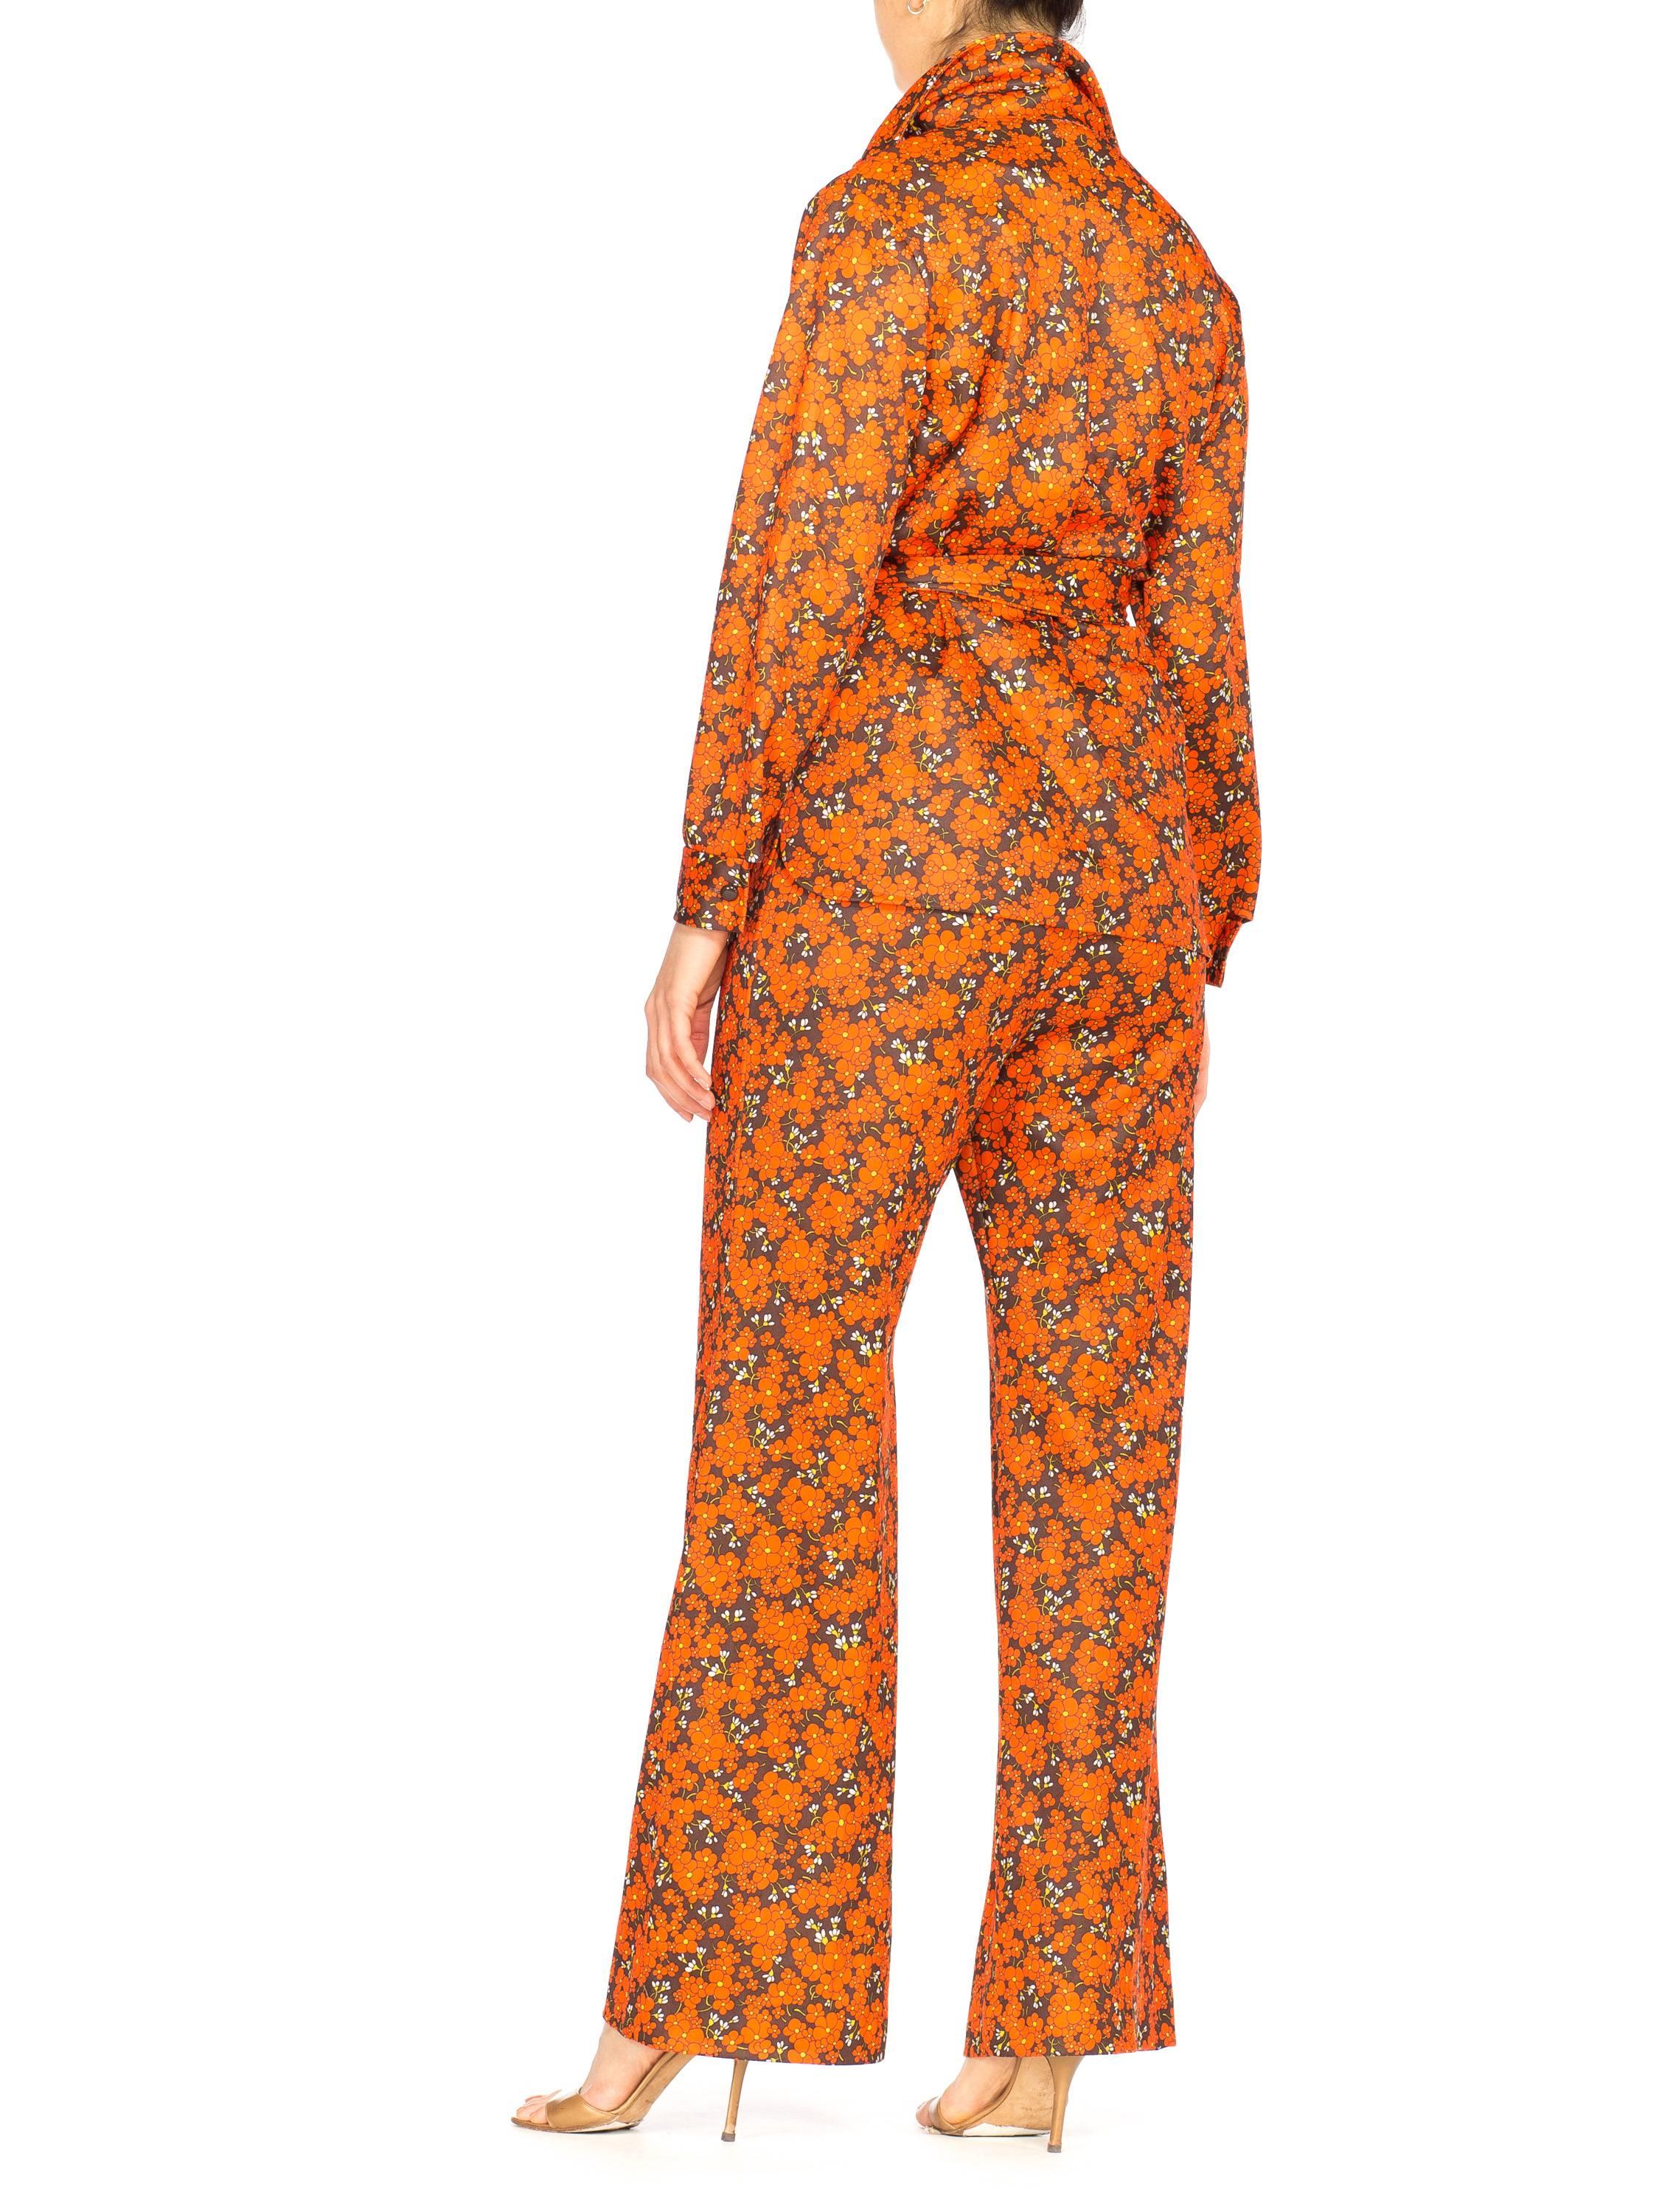 Orange and Brown Floral Mod Disco Pantsuit Set, 1970s 1